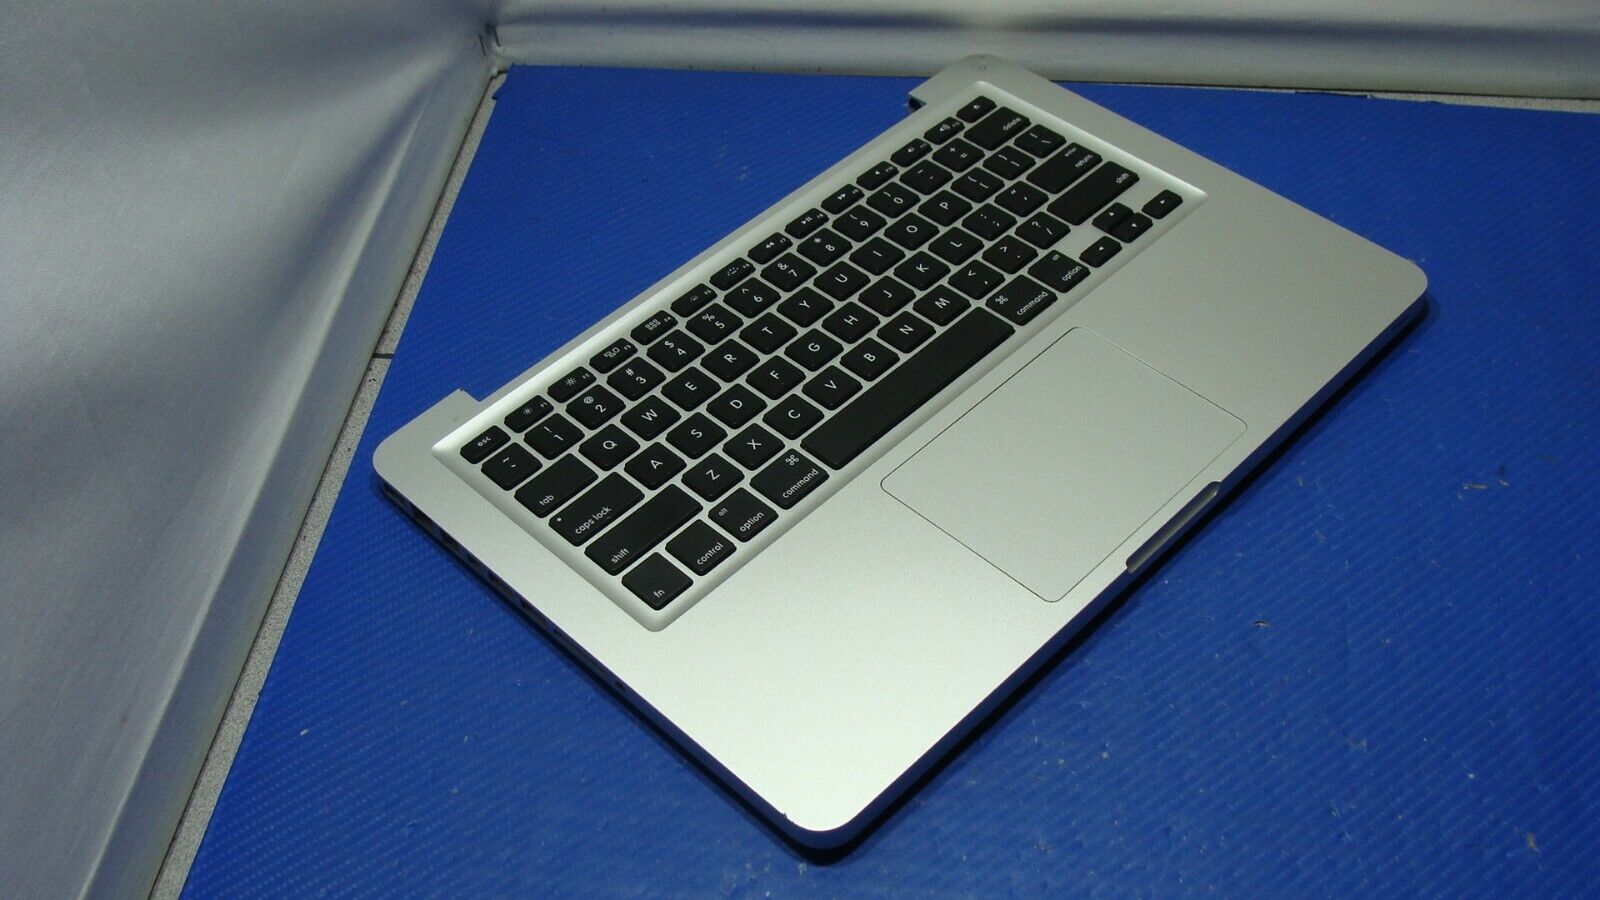 MacBook Pro 13 A1278 Mid 2009 MB990LL/A Top Case w/Keyboard TrackPad 661-5233